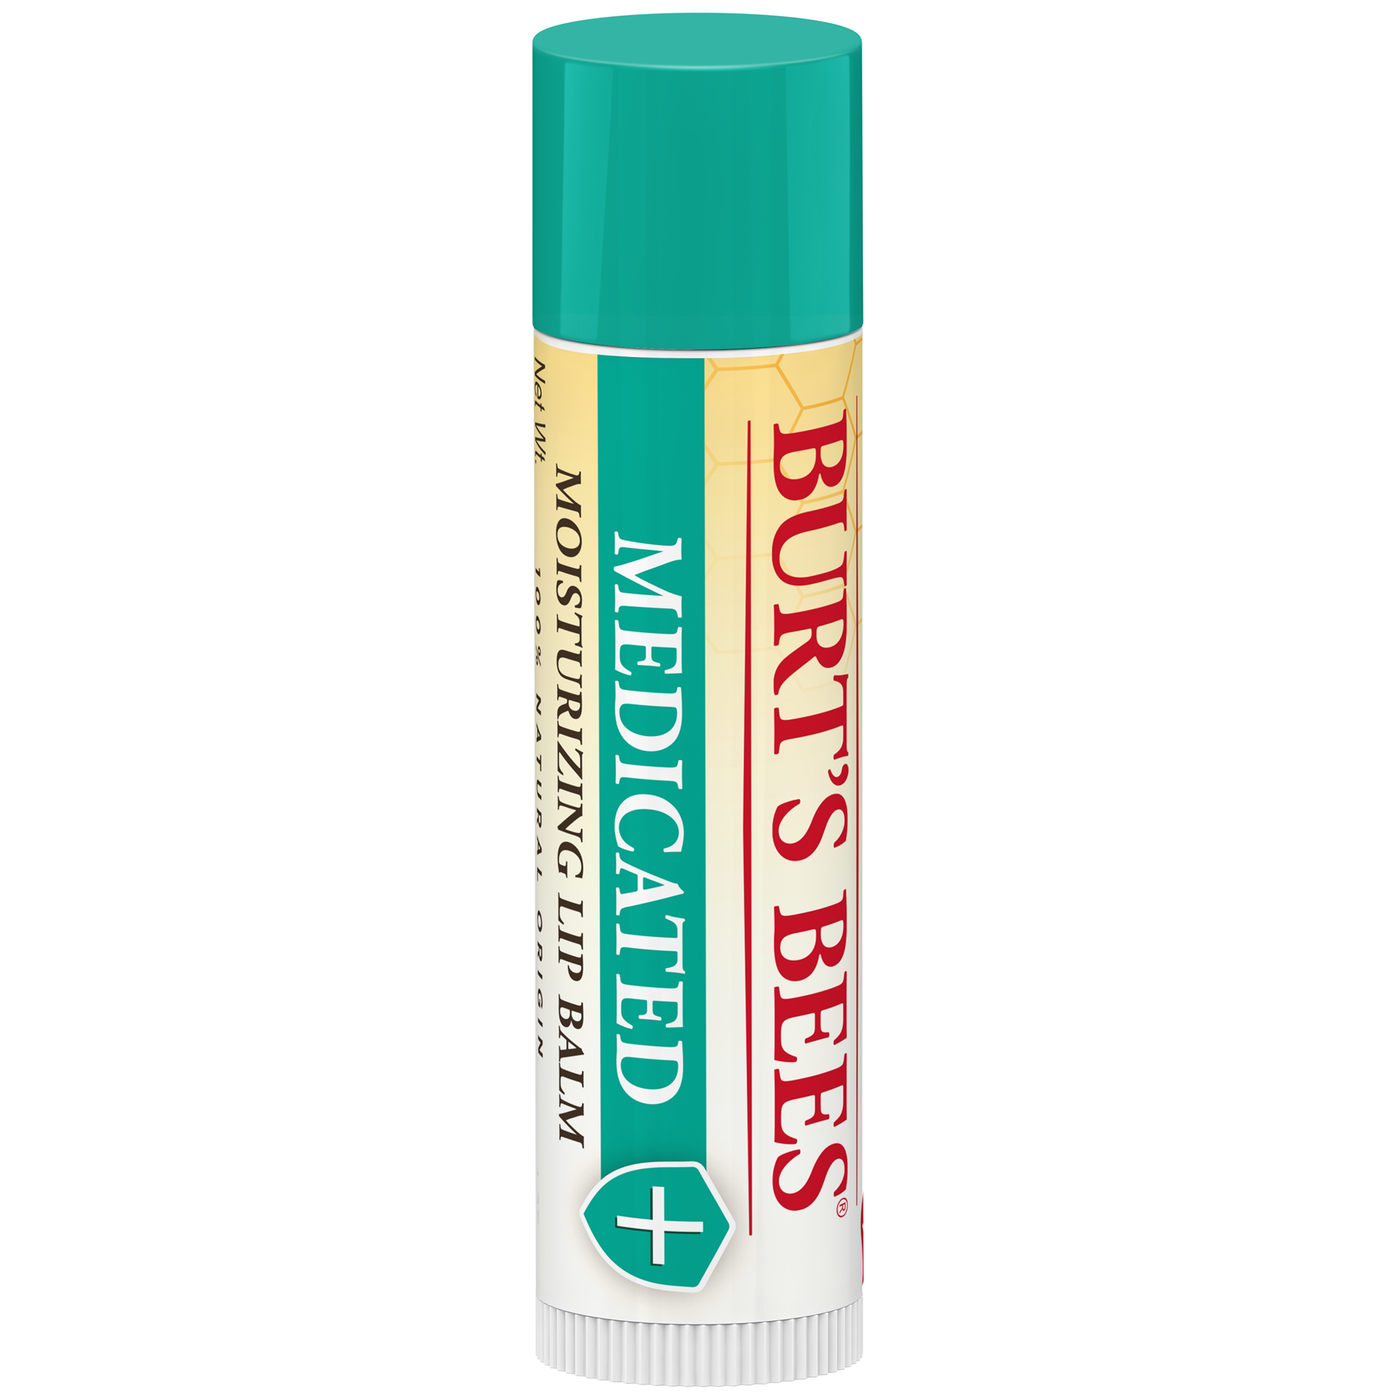 Burt's Bees Lip Balm Medicated 0.15oz Curated Wellness